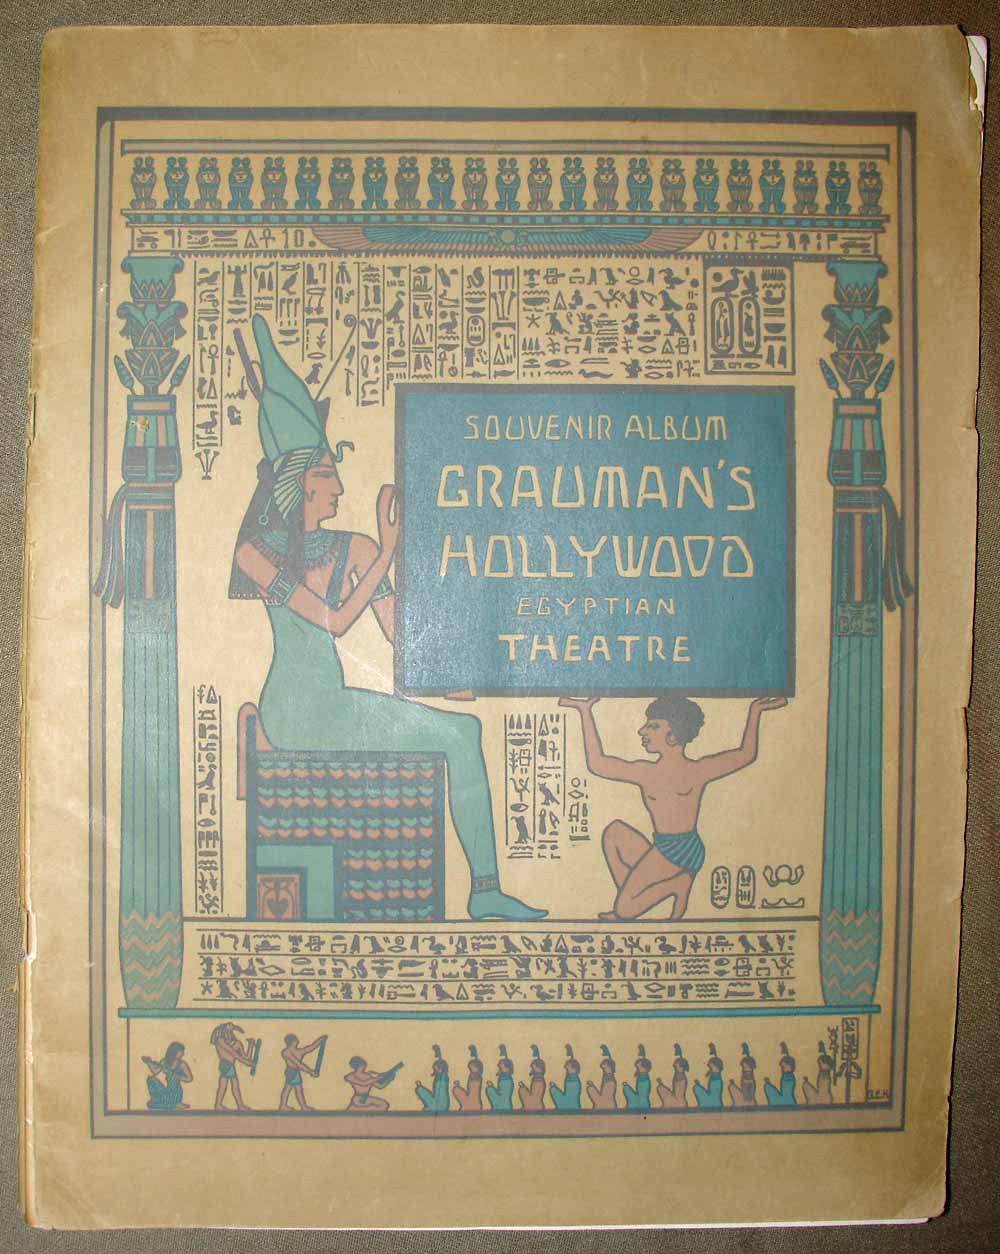 Grauman’s Hollywood Egyptian Theatre